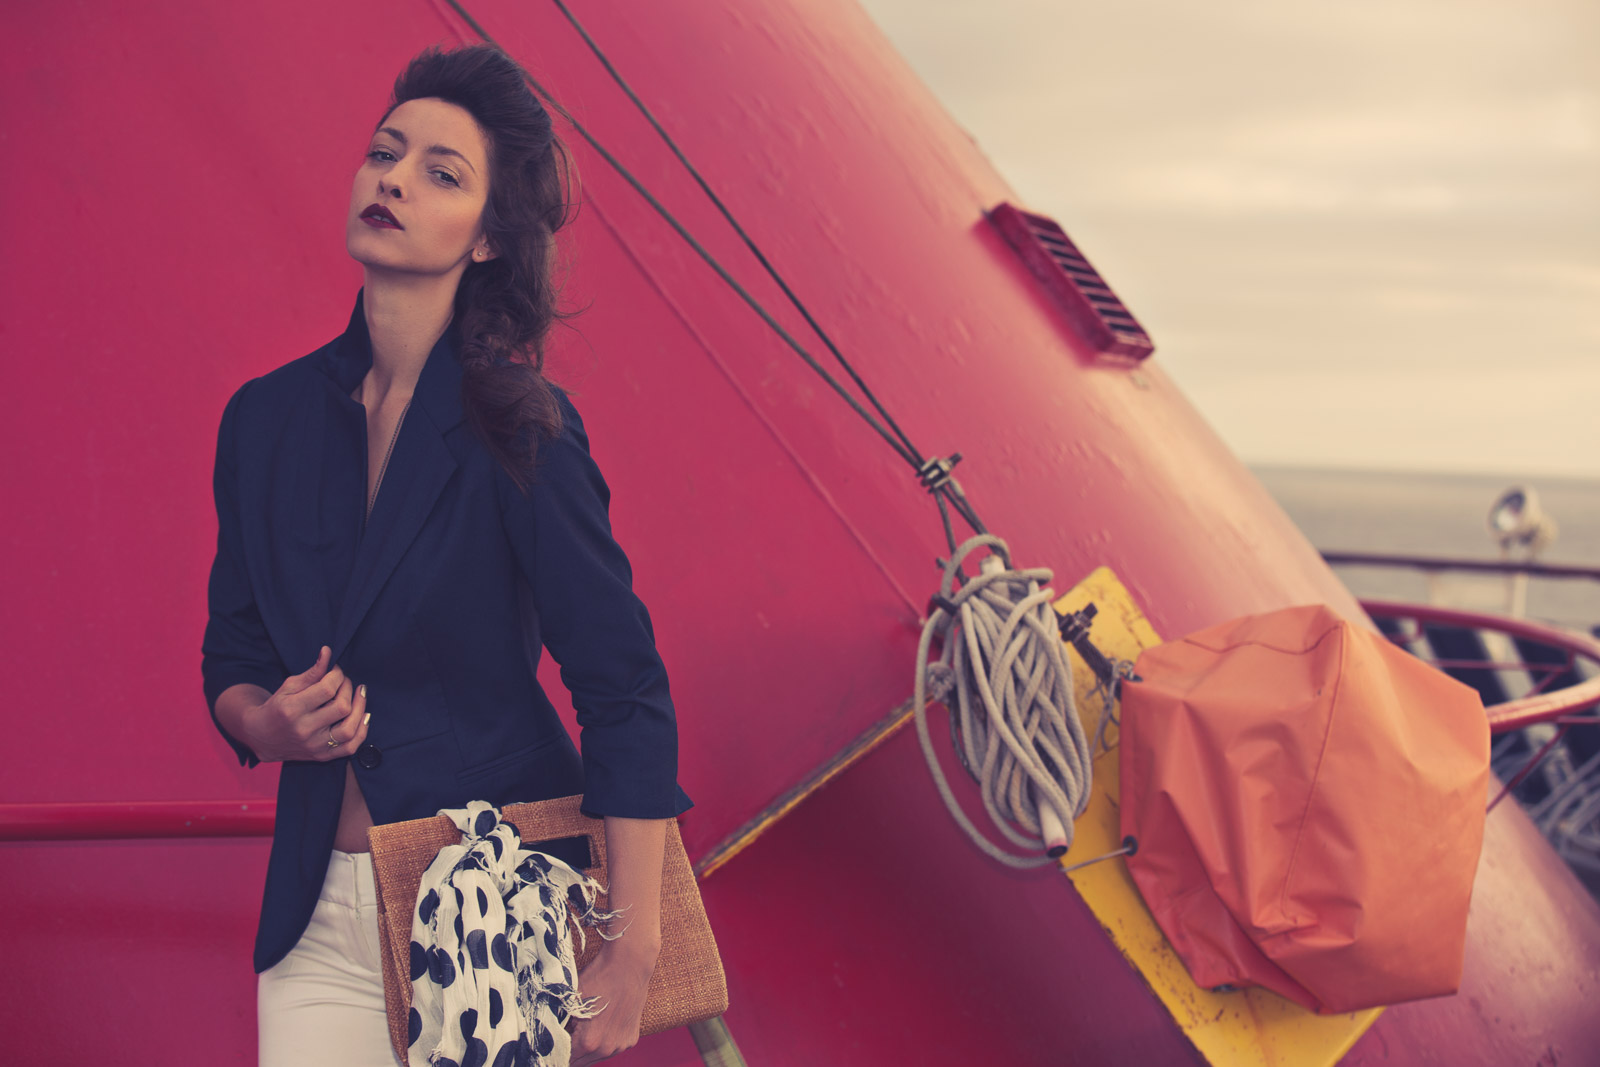 Cruising Fashion Editorial, with model Tatiana Junqueira. Photo by Los Angeles Fashion Photographer James Hickey.